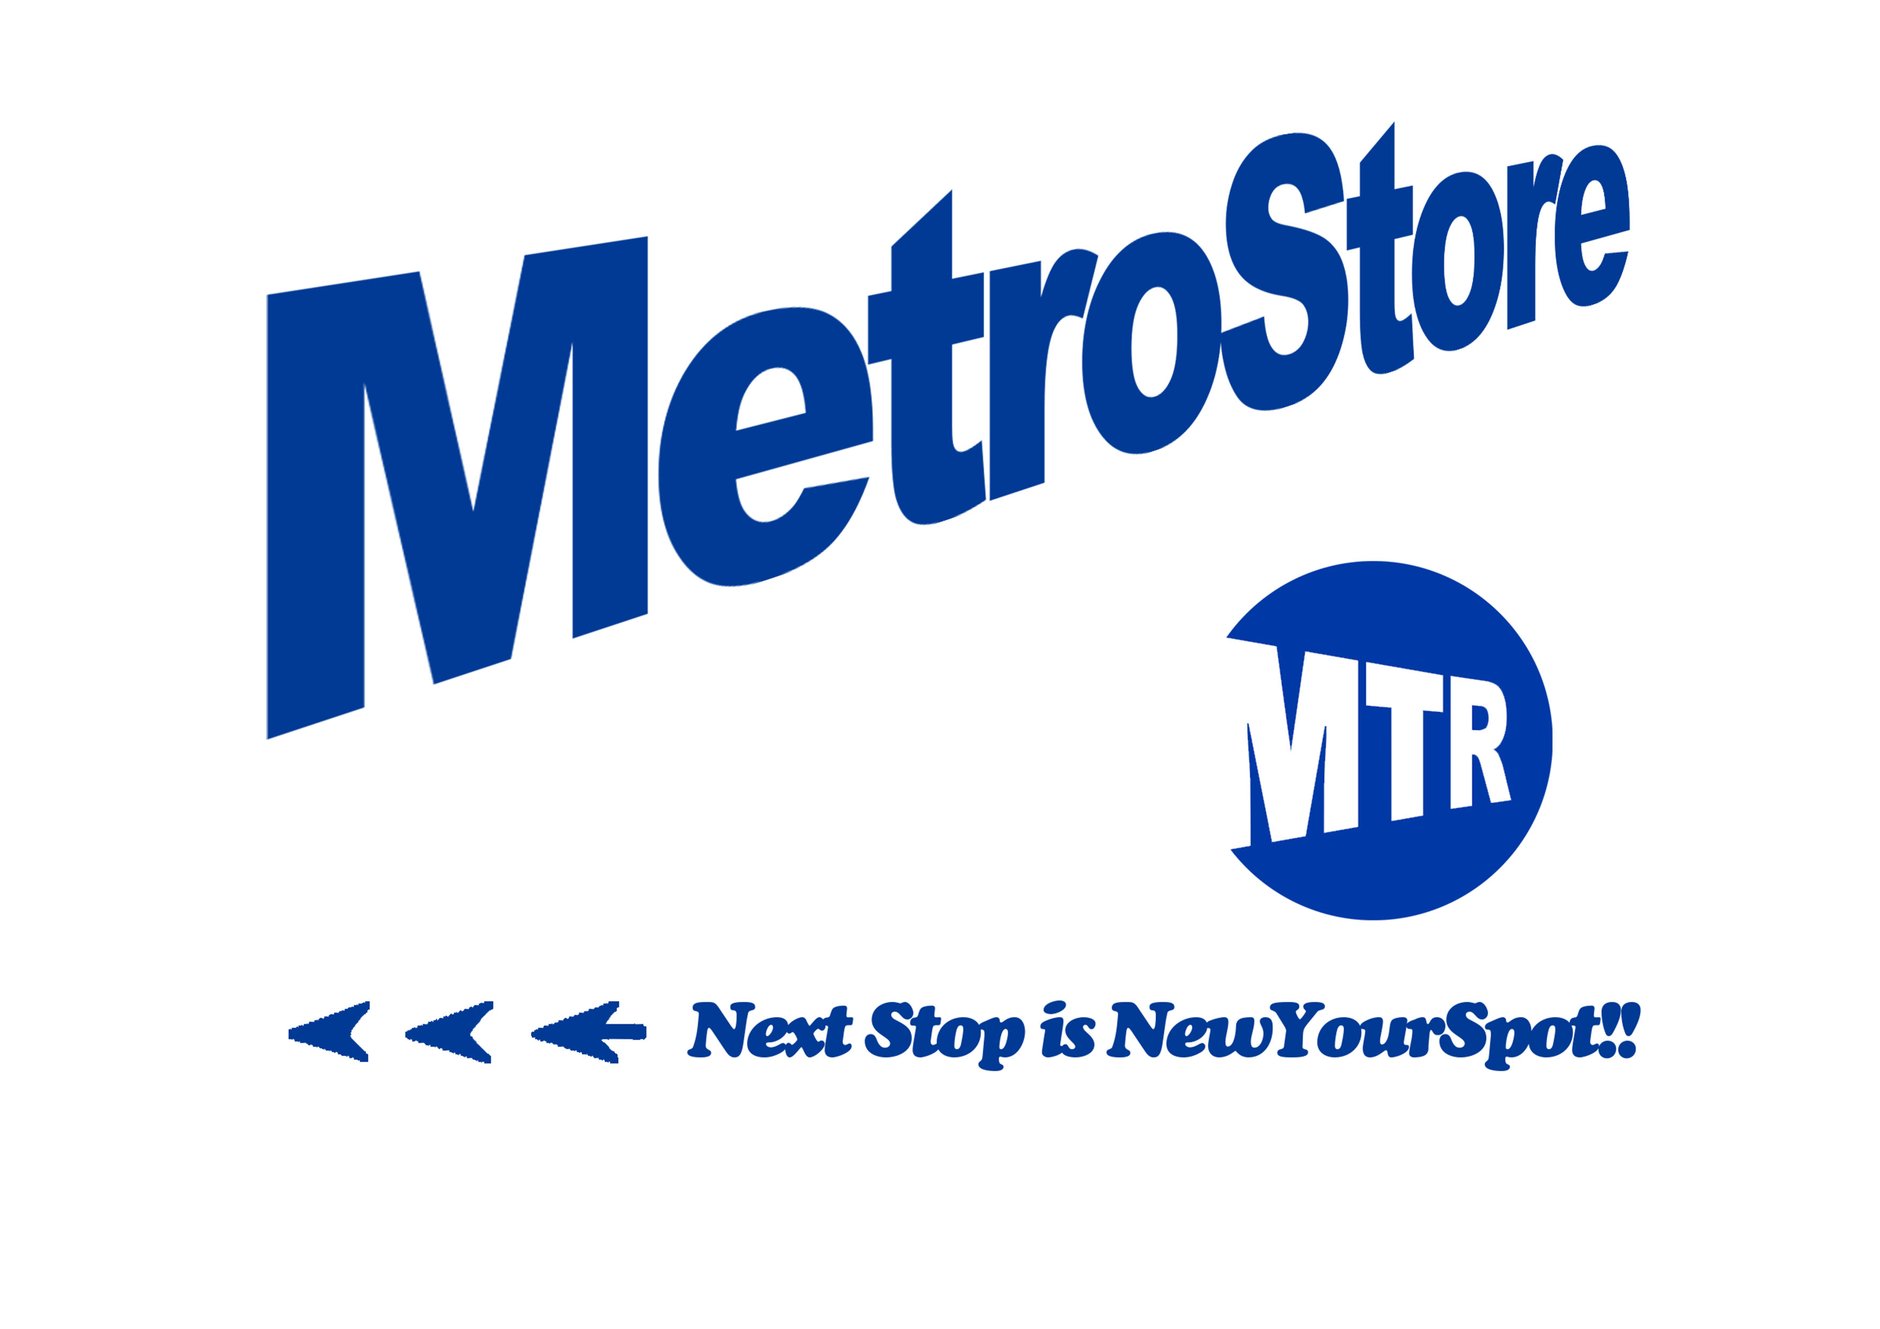 MetroStore